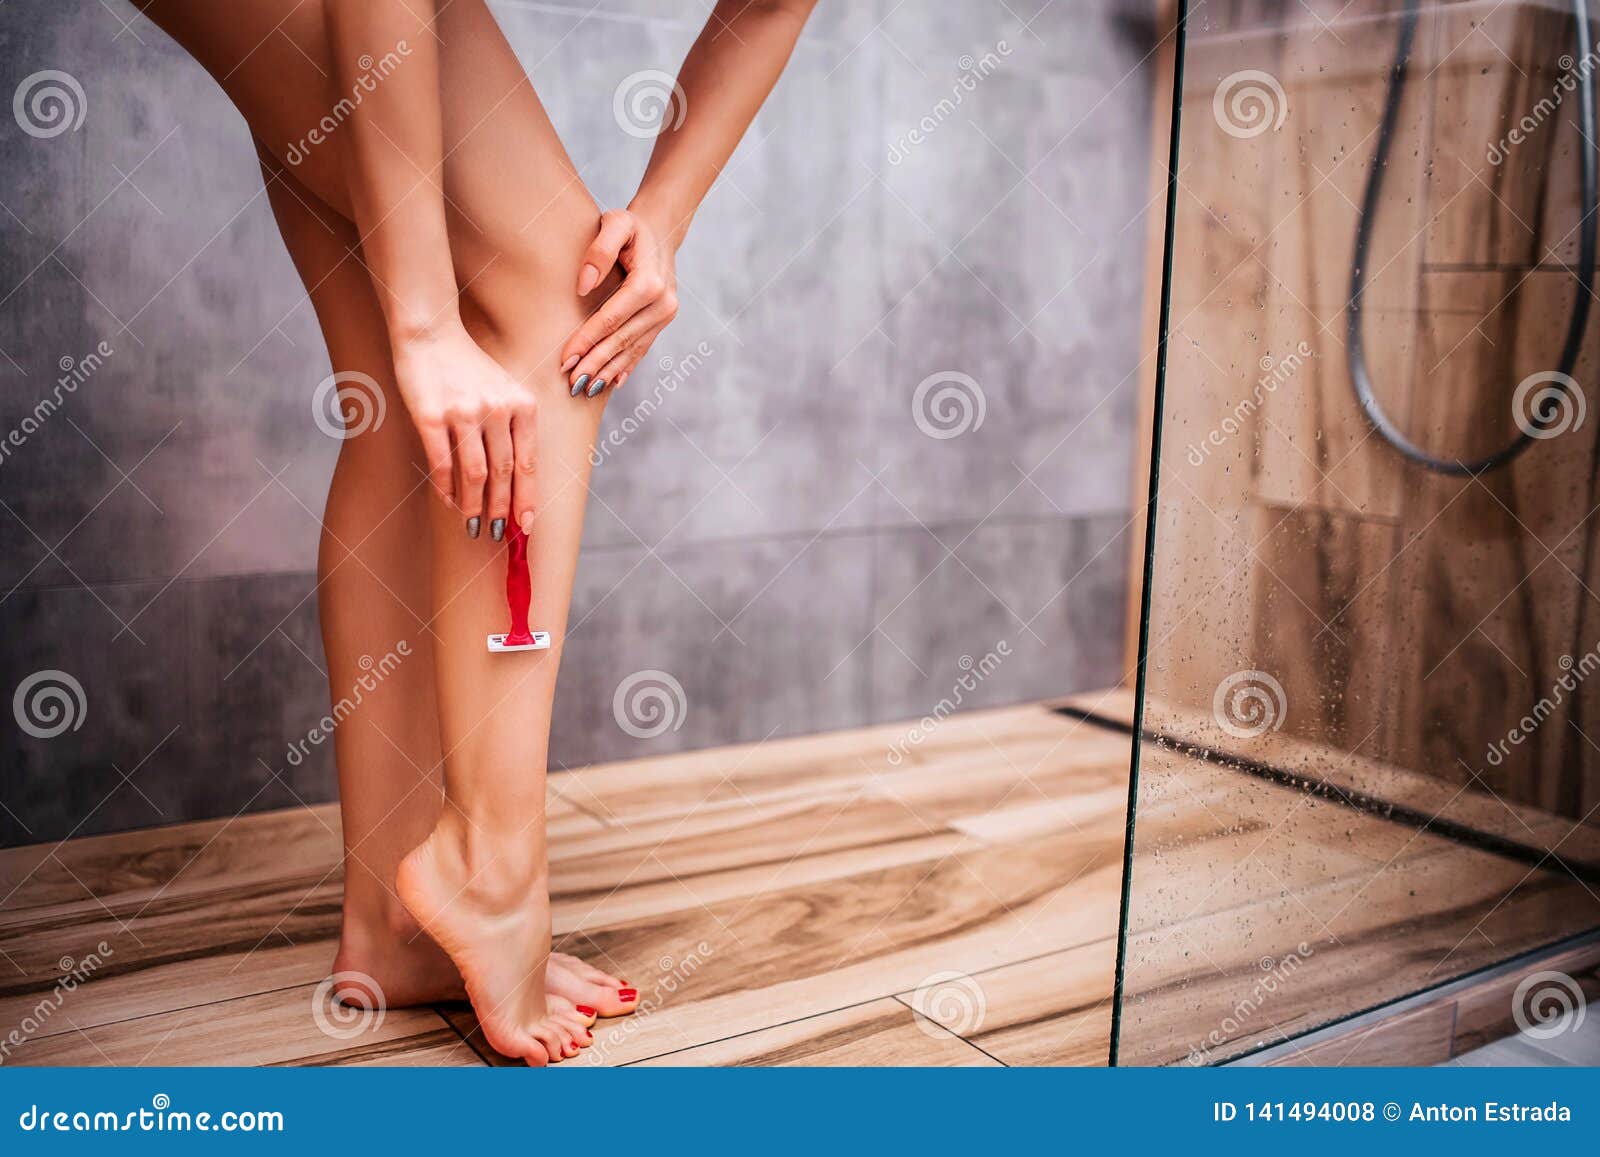 Nude Model Shaving Legs